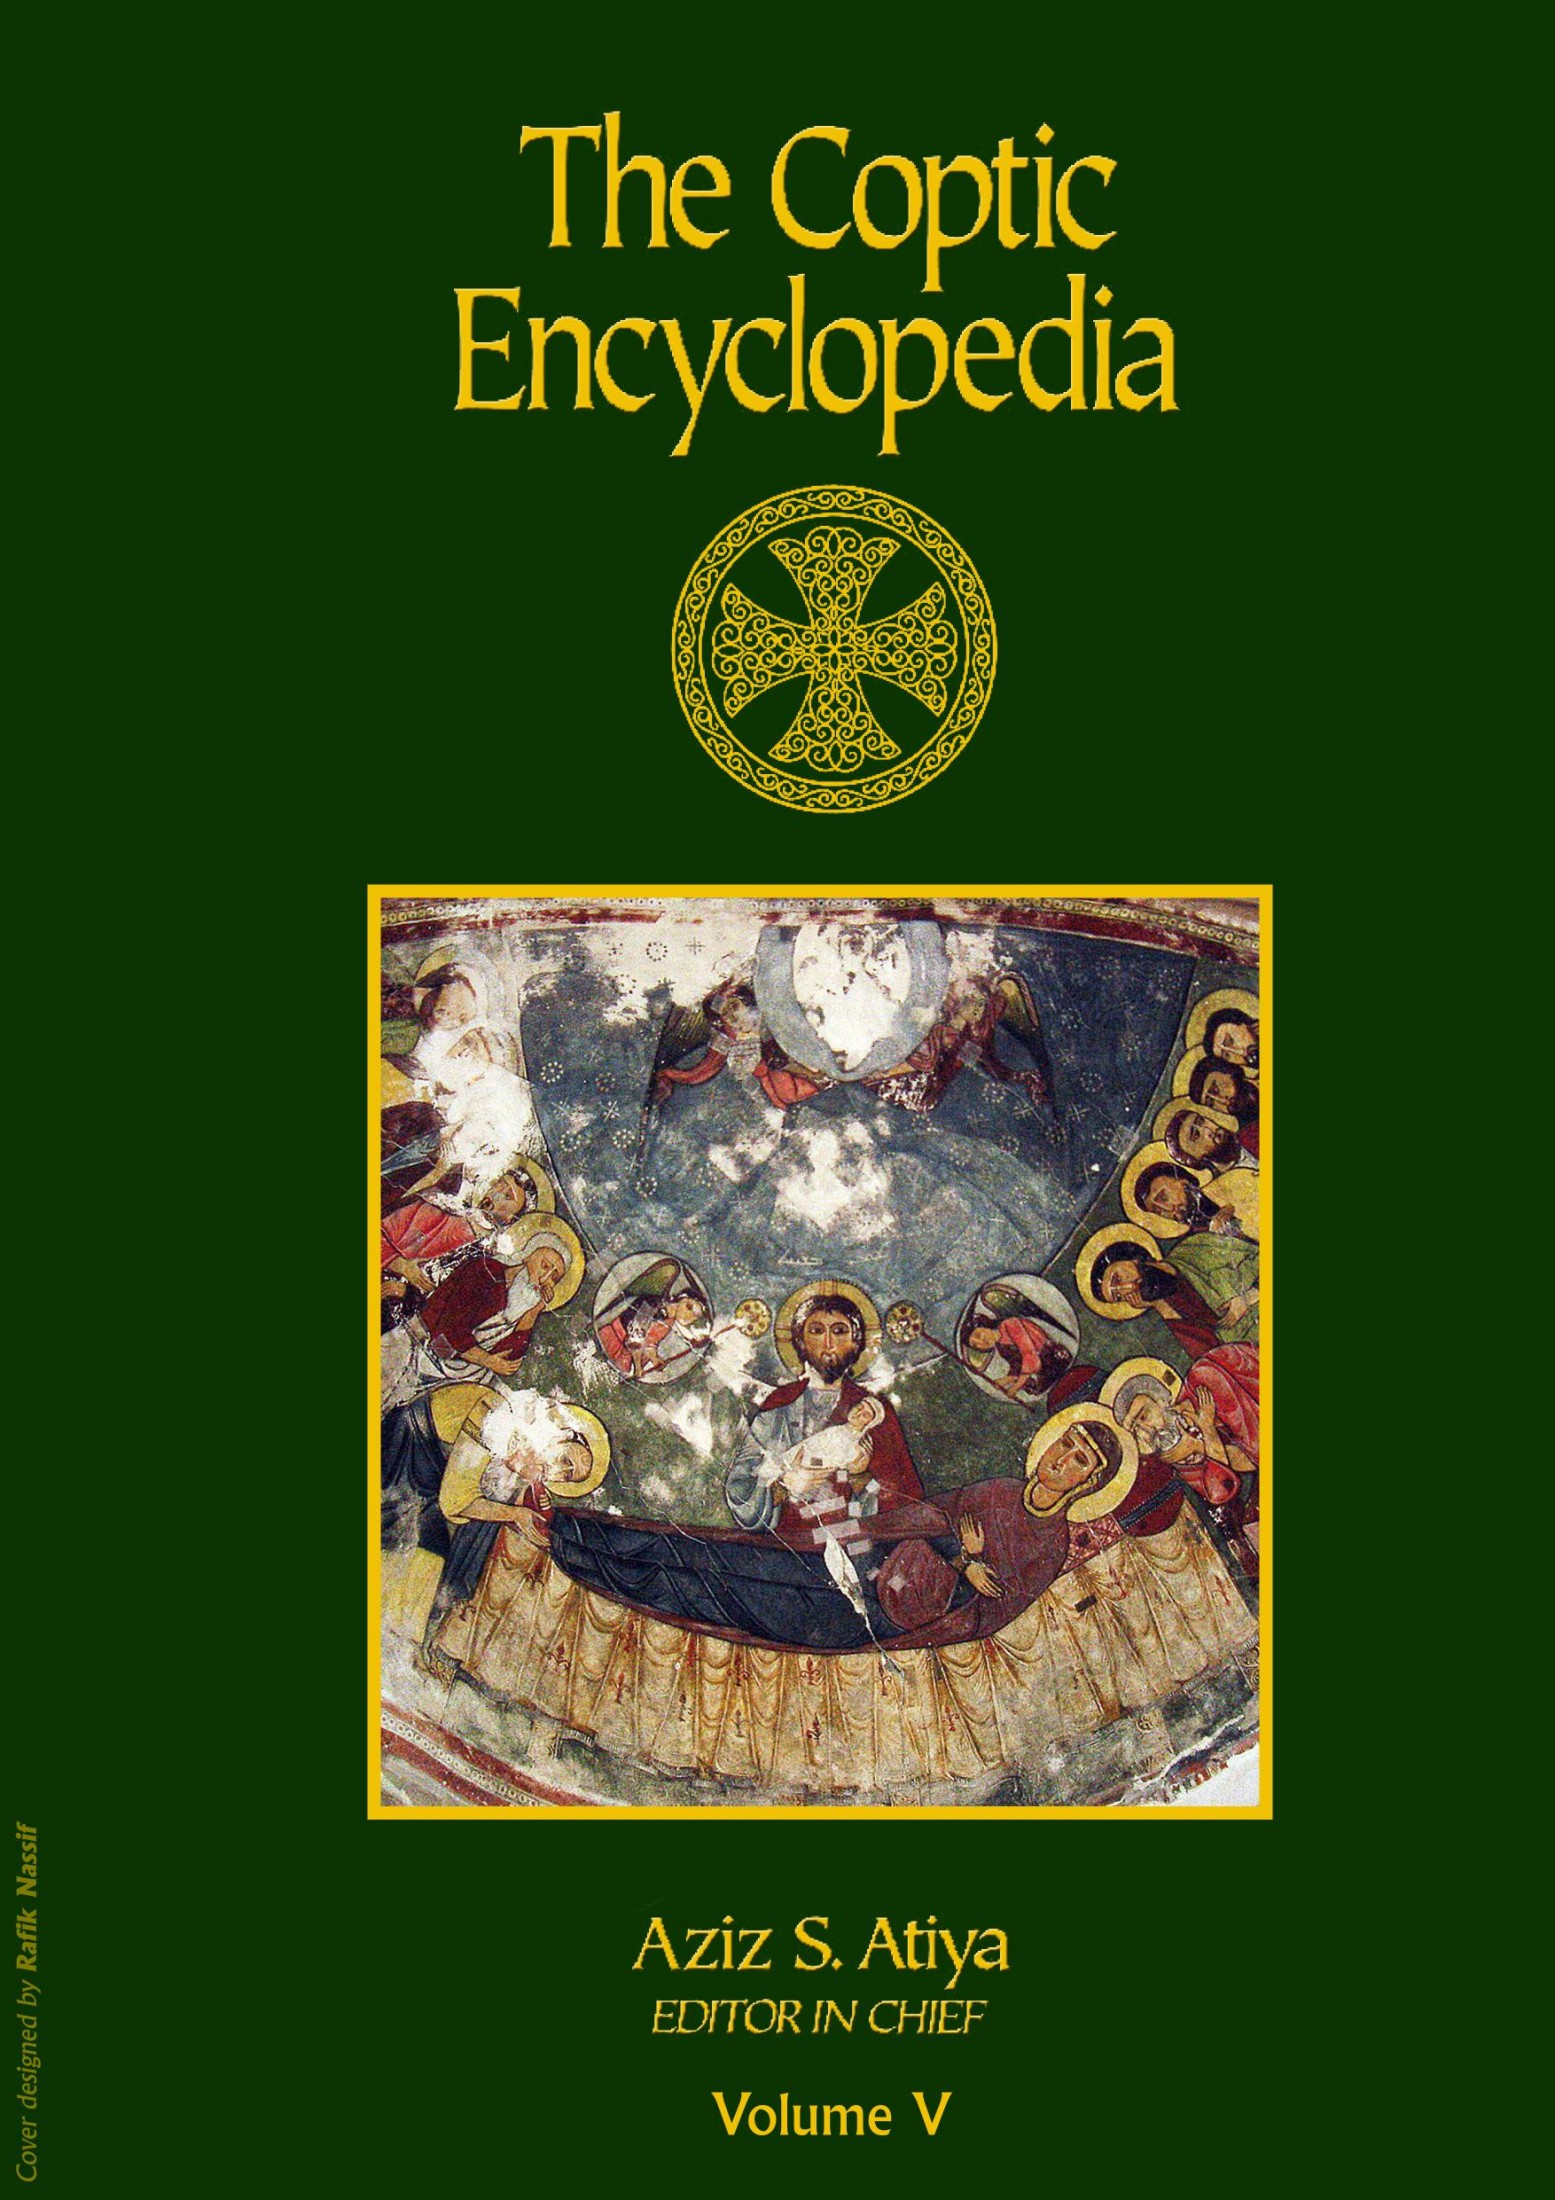 The Coptic Encyclopedia - Volume 5 (JO-MU)